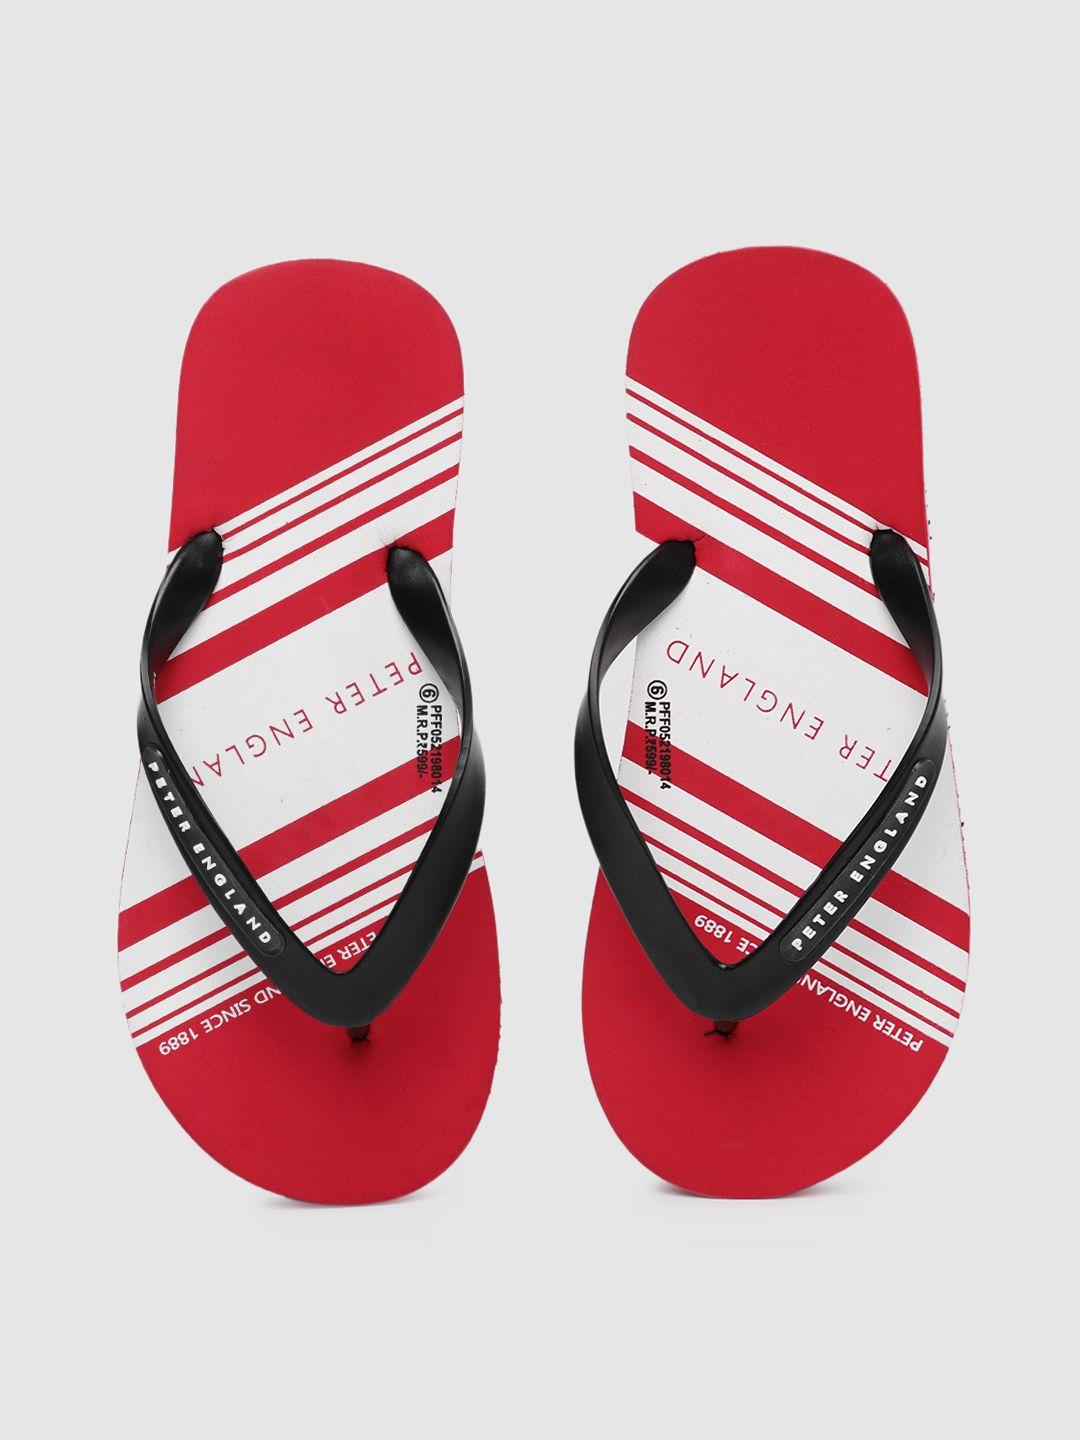 peter-england-men-red-&-white-brand-logo-printed-rubber-thong-flip-flops